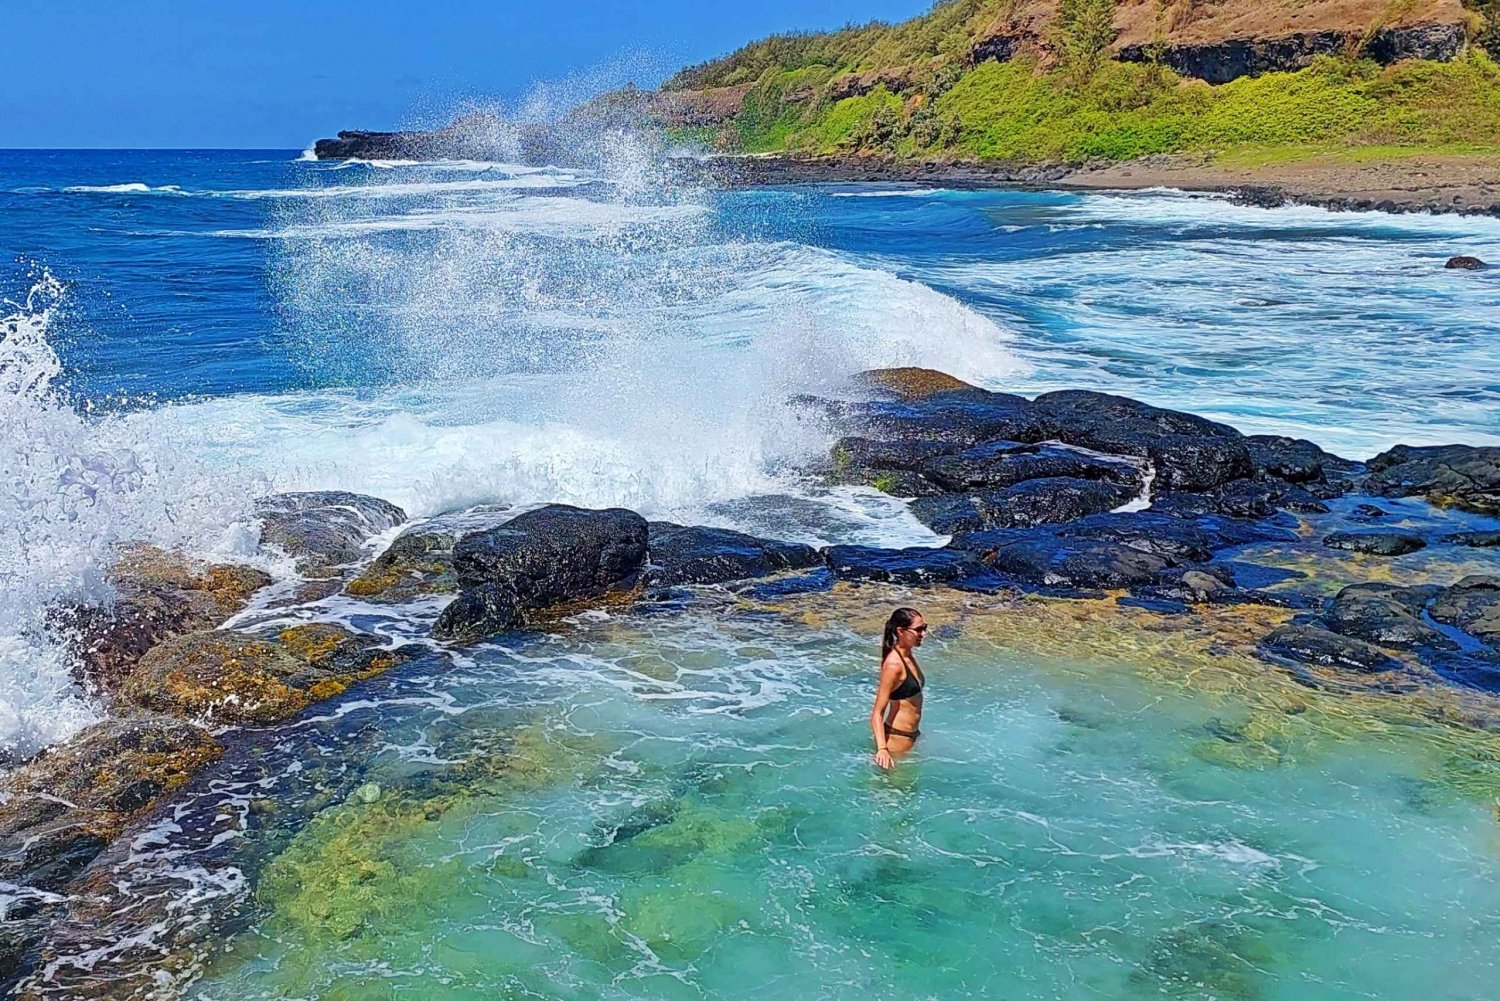 Mauritius: Gris Gris Beach & Mamzelle Waterfall Guided Tour